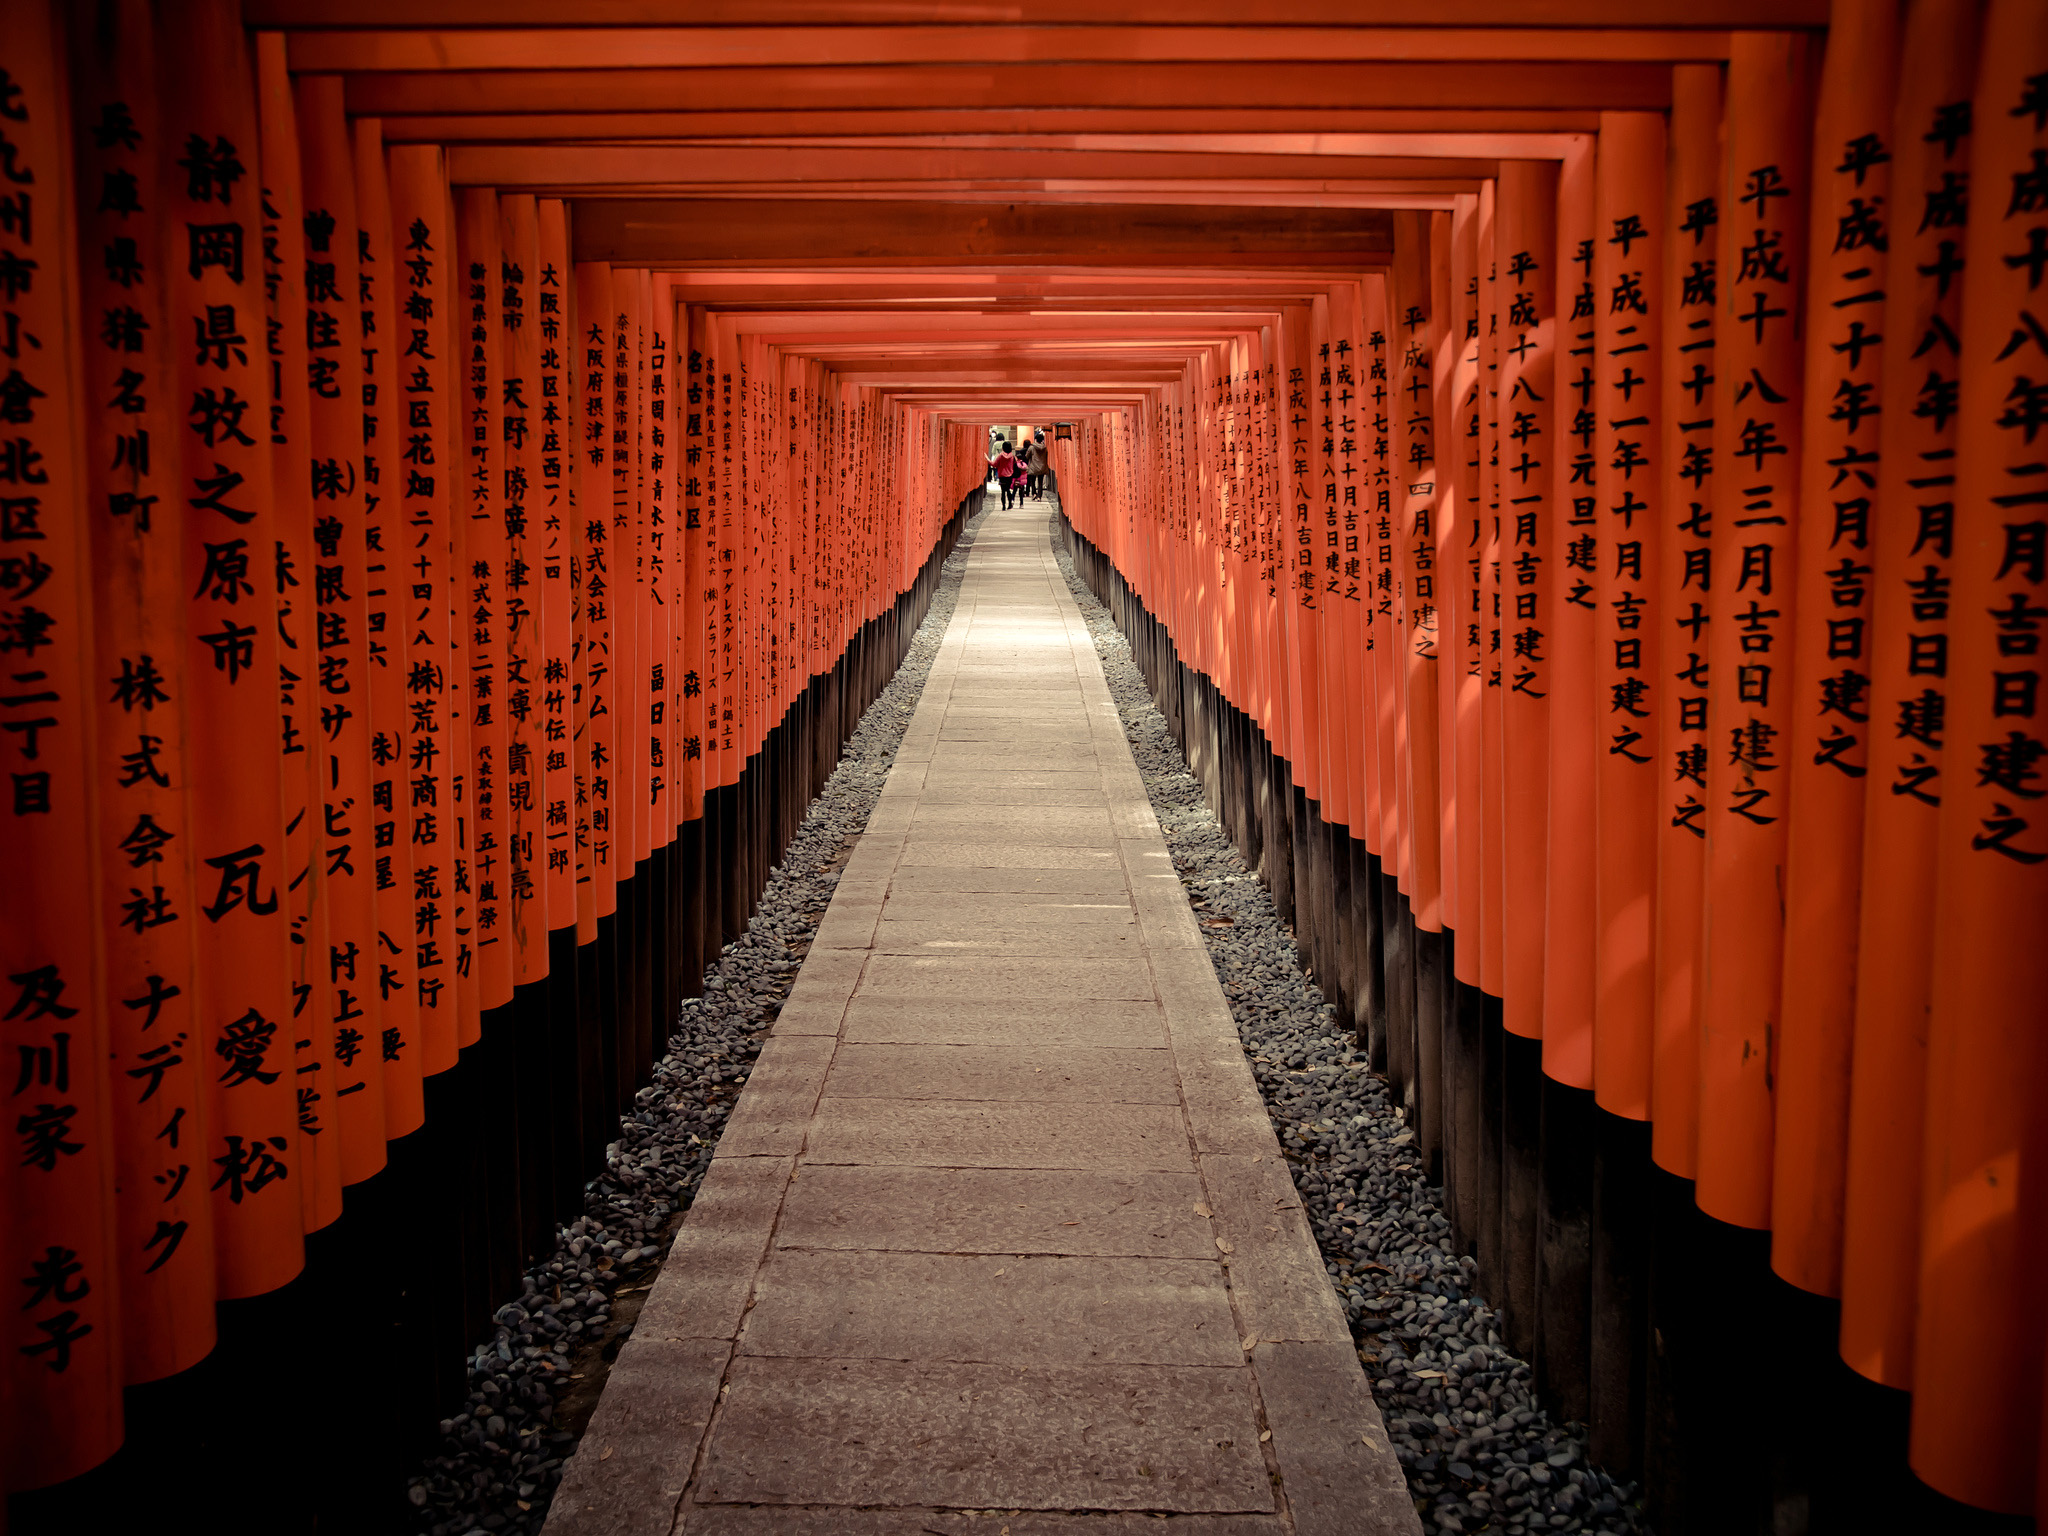 Fushimi Inari Shrine (1000 torii gates) - Tourist in Japan